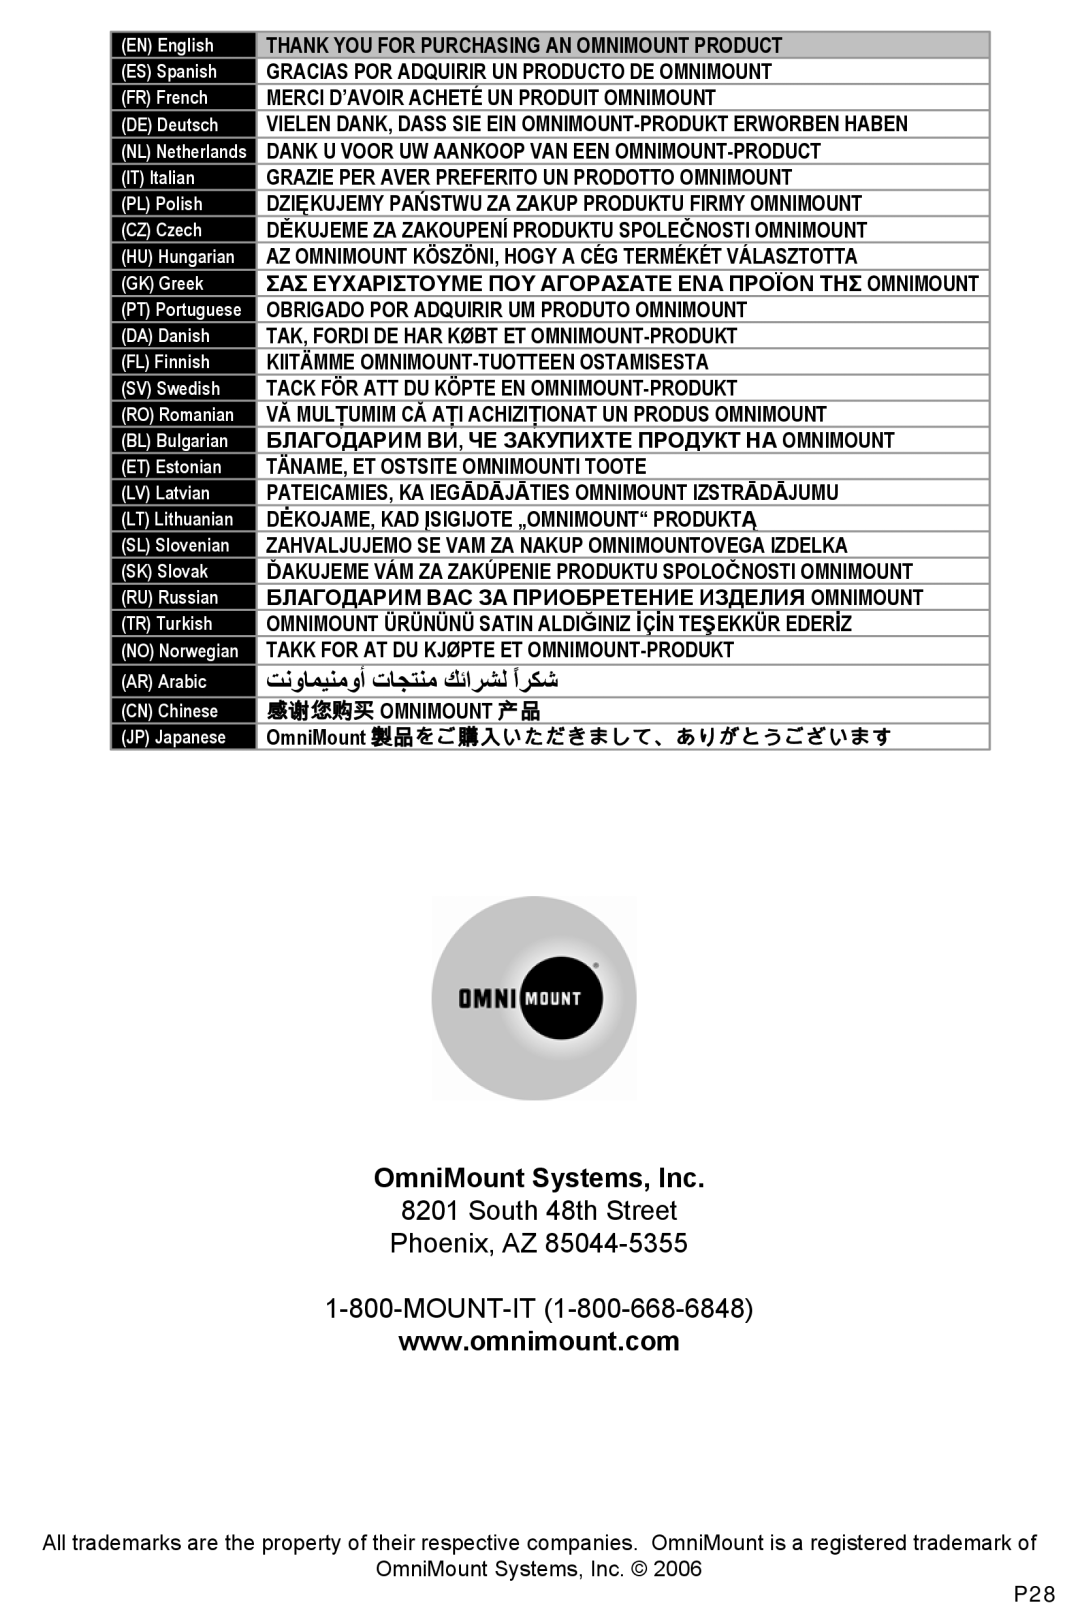 Omnimount OM1004461 OmniMount Systems, Inc, Thank You For Purchasing An Omnimount Product, ﺖﻧوﺎﻤﻴﻨﻣوأ تﺎﺠﺘﻨﻣ ﻚﺋاﺮﺸﻟ اﺮﻜﺷً 